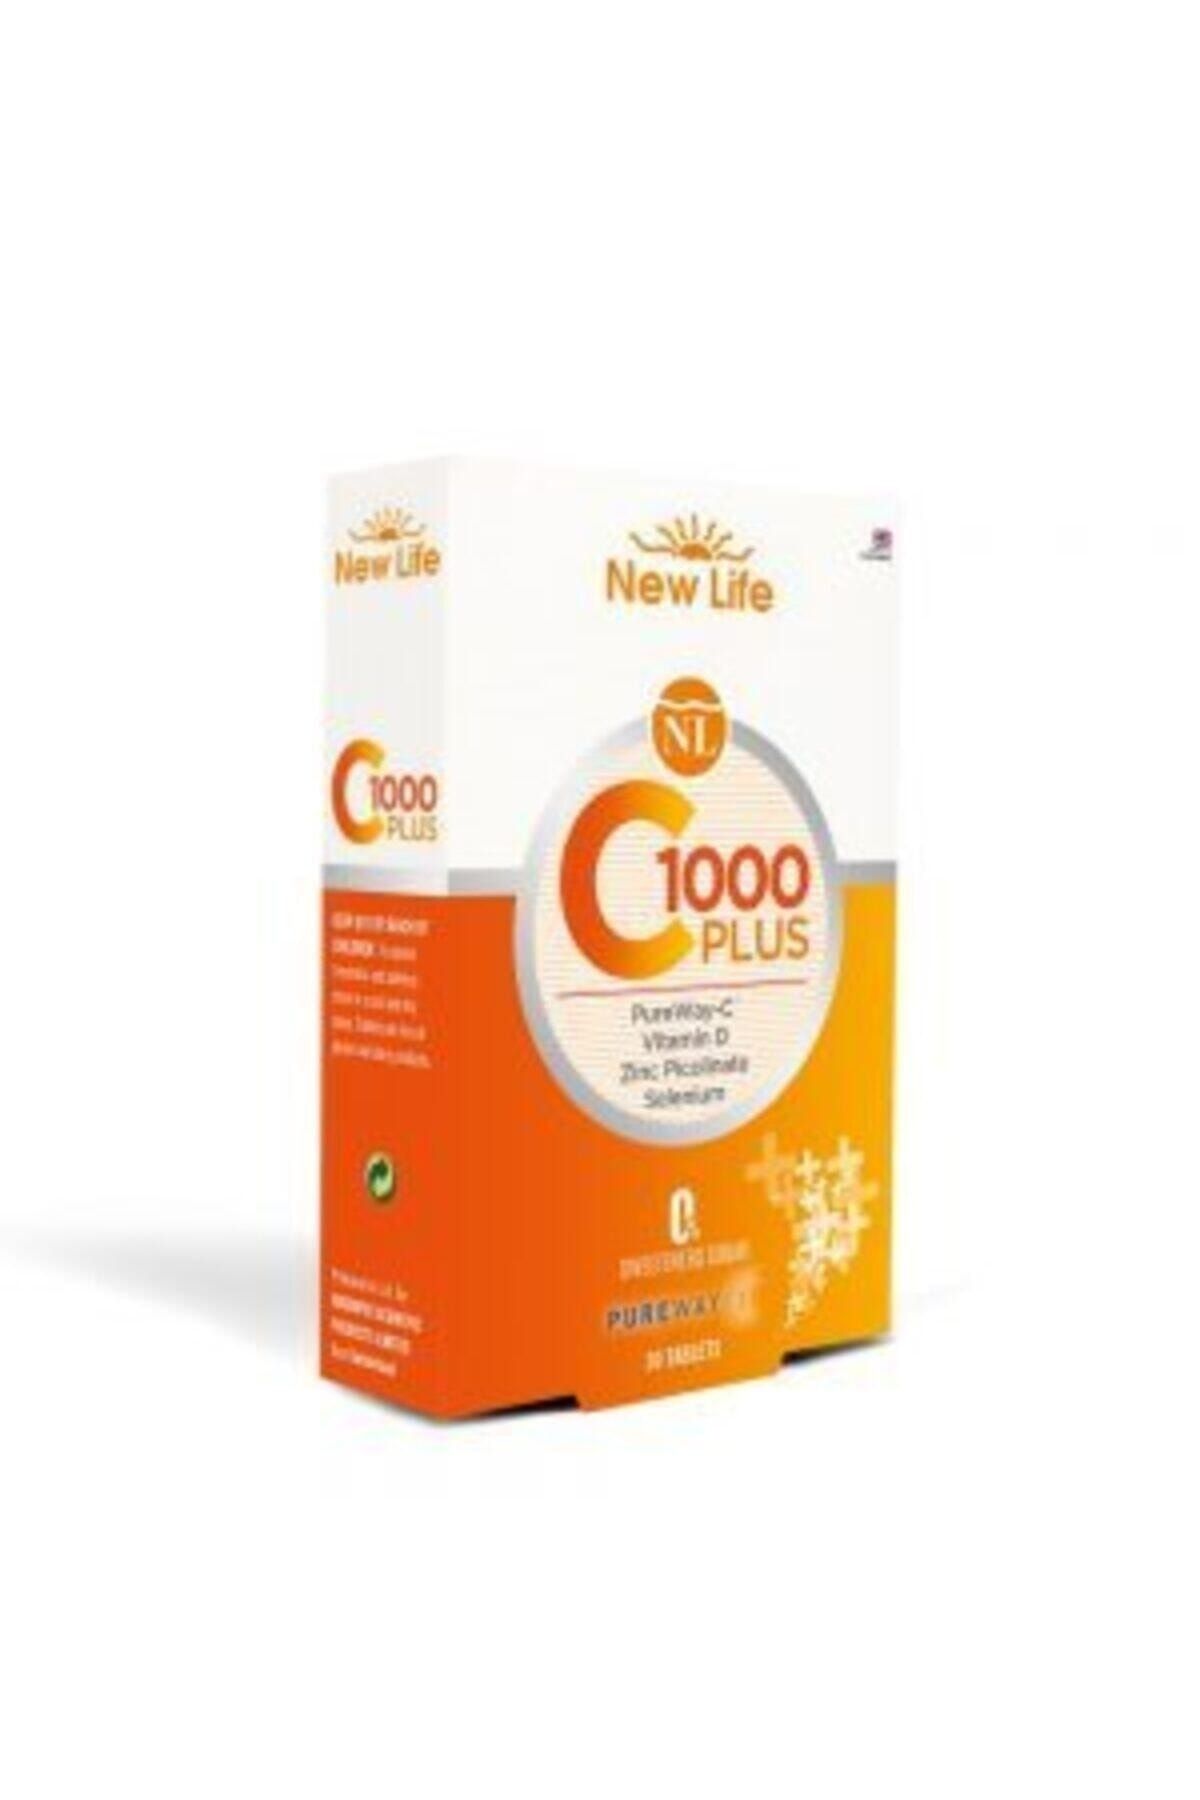 New Life Newlife C-1000 Plus 30 Tablet